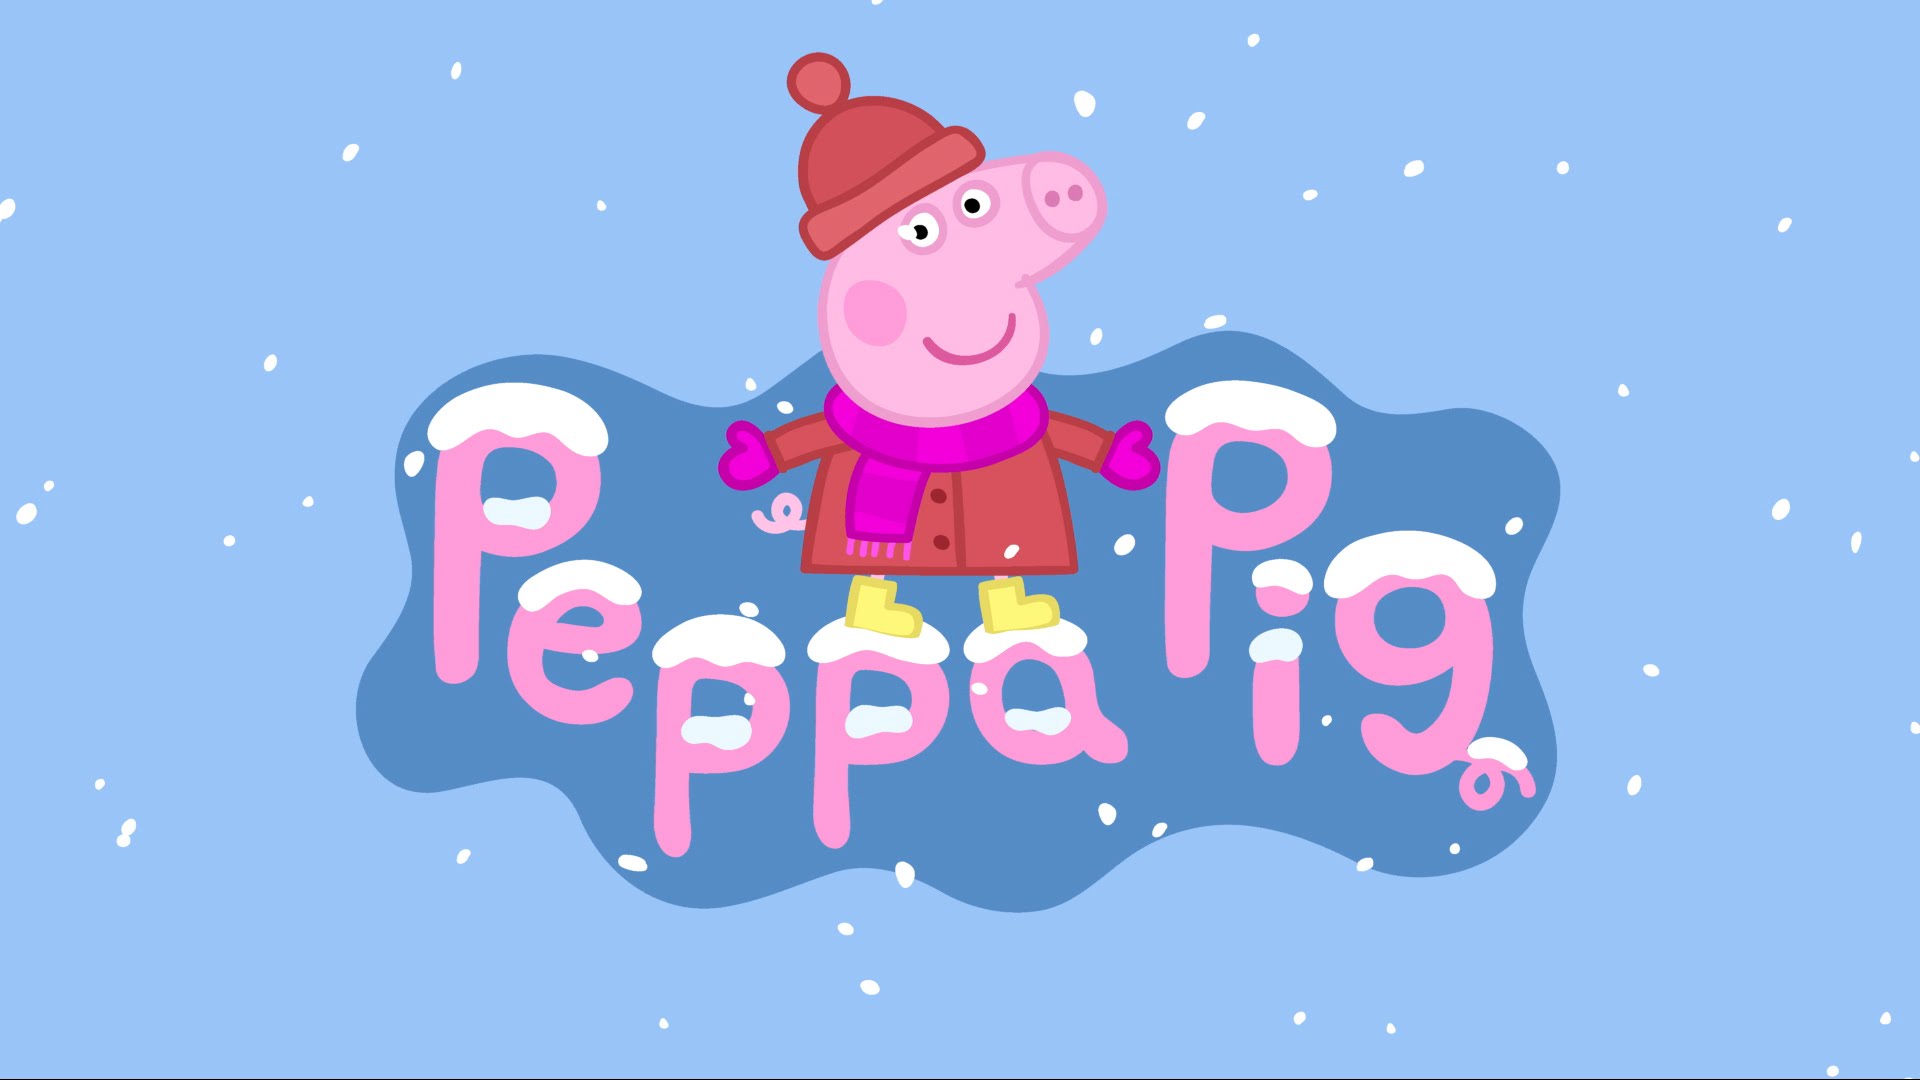 Peppa Pig Aesthetic Wallpaper